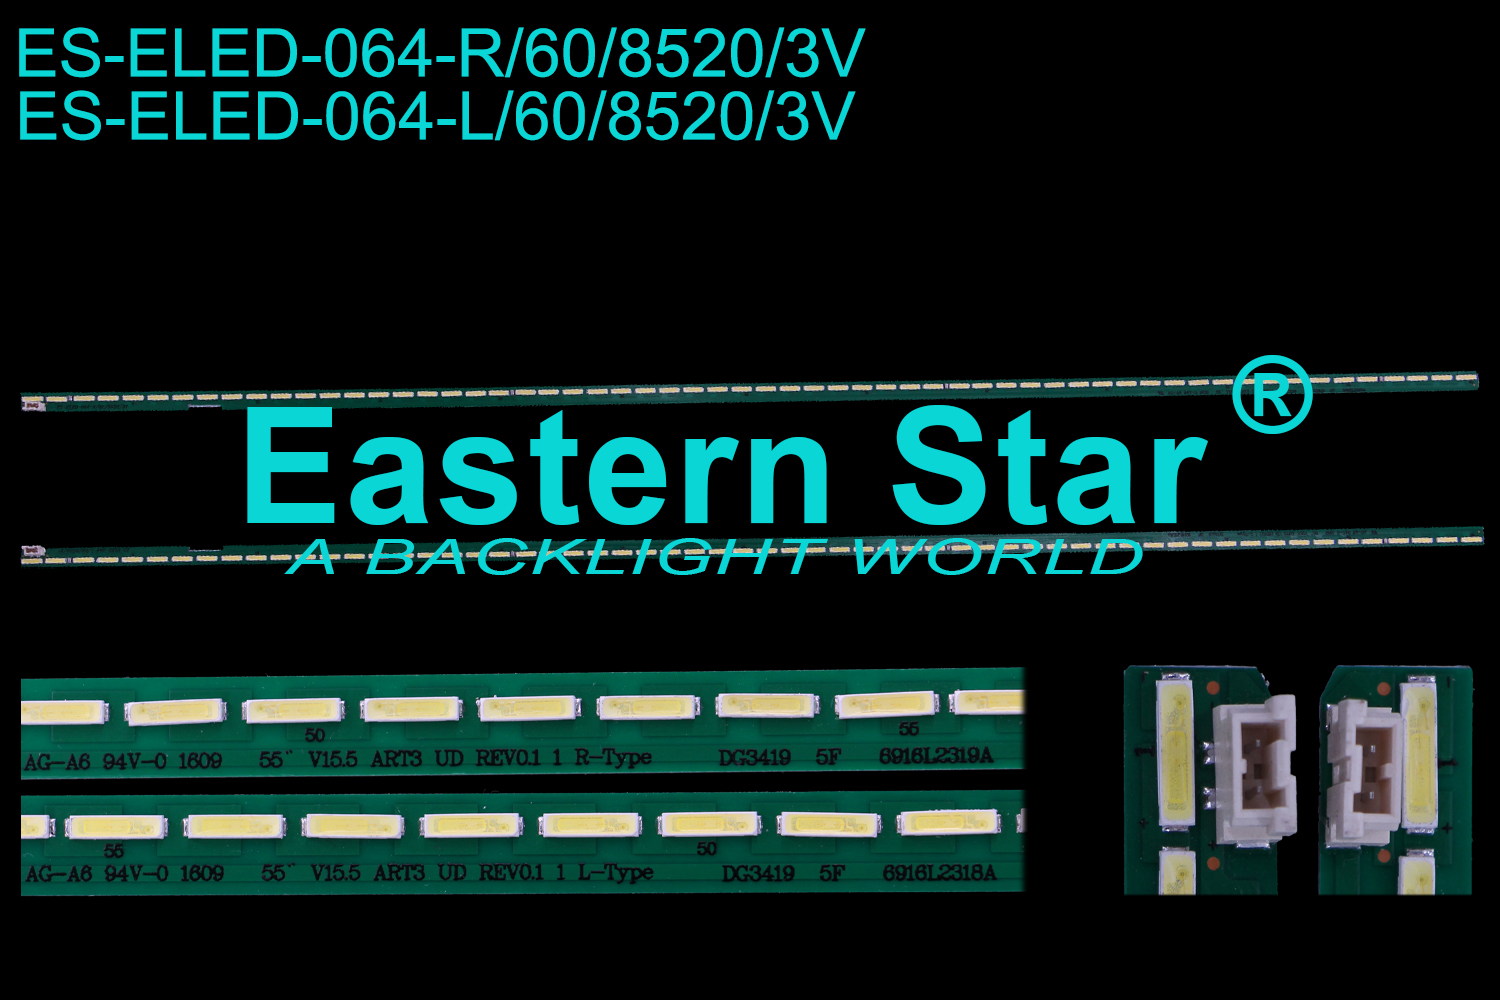 ES-ELED-064 ELED/EDGE TV Backlight use for Lg 55'' V15.5 ART13 UD REV0.1 1 L/R-TYPE   6916L-2318A (/)